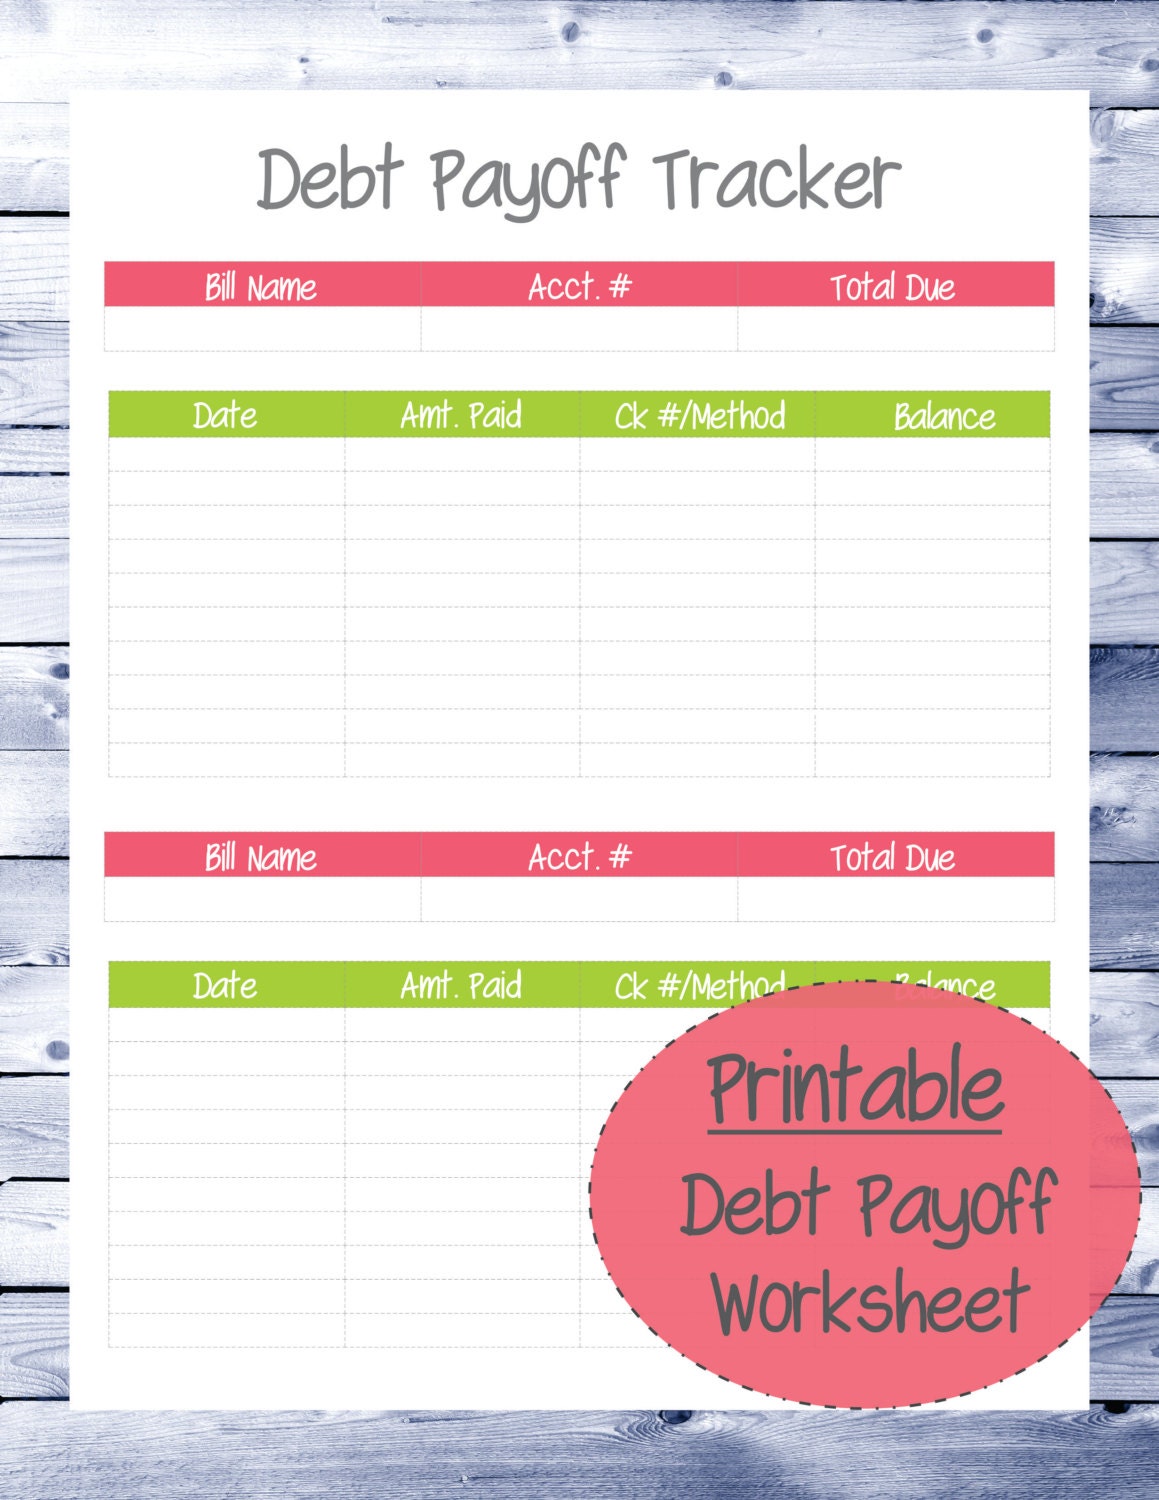 Debt Payoff Tracker Worksheet Printable by MarieReneeCreations